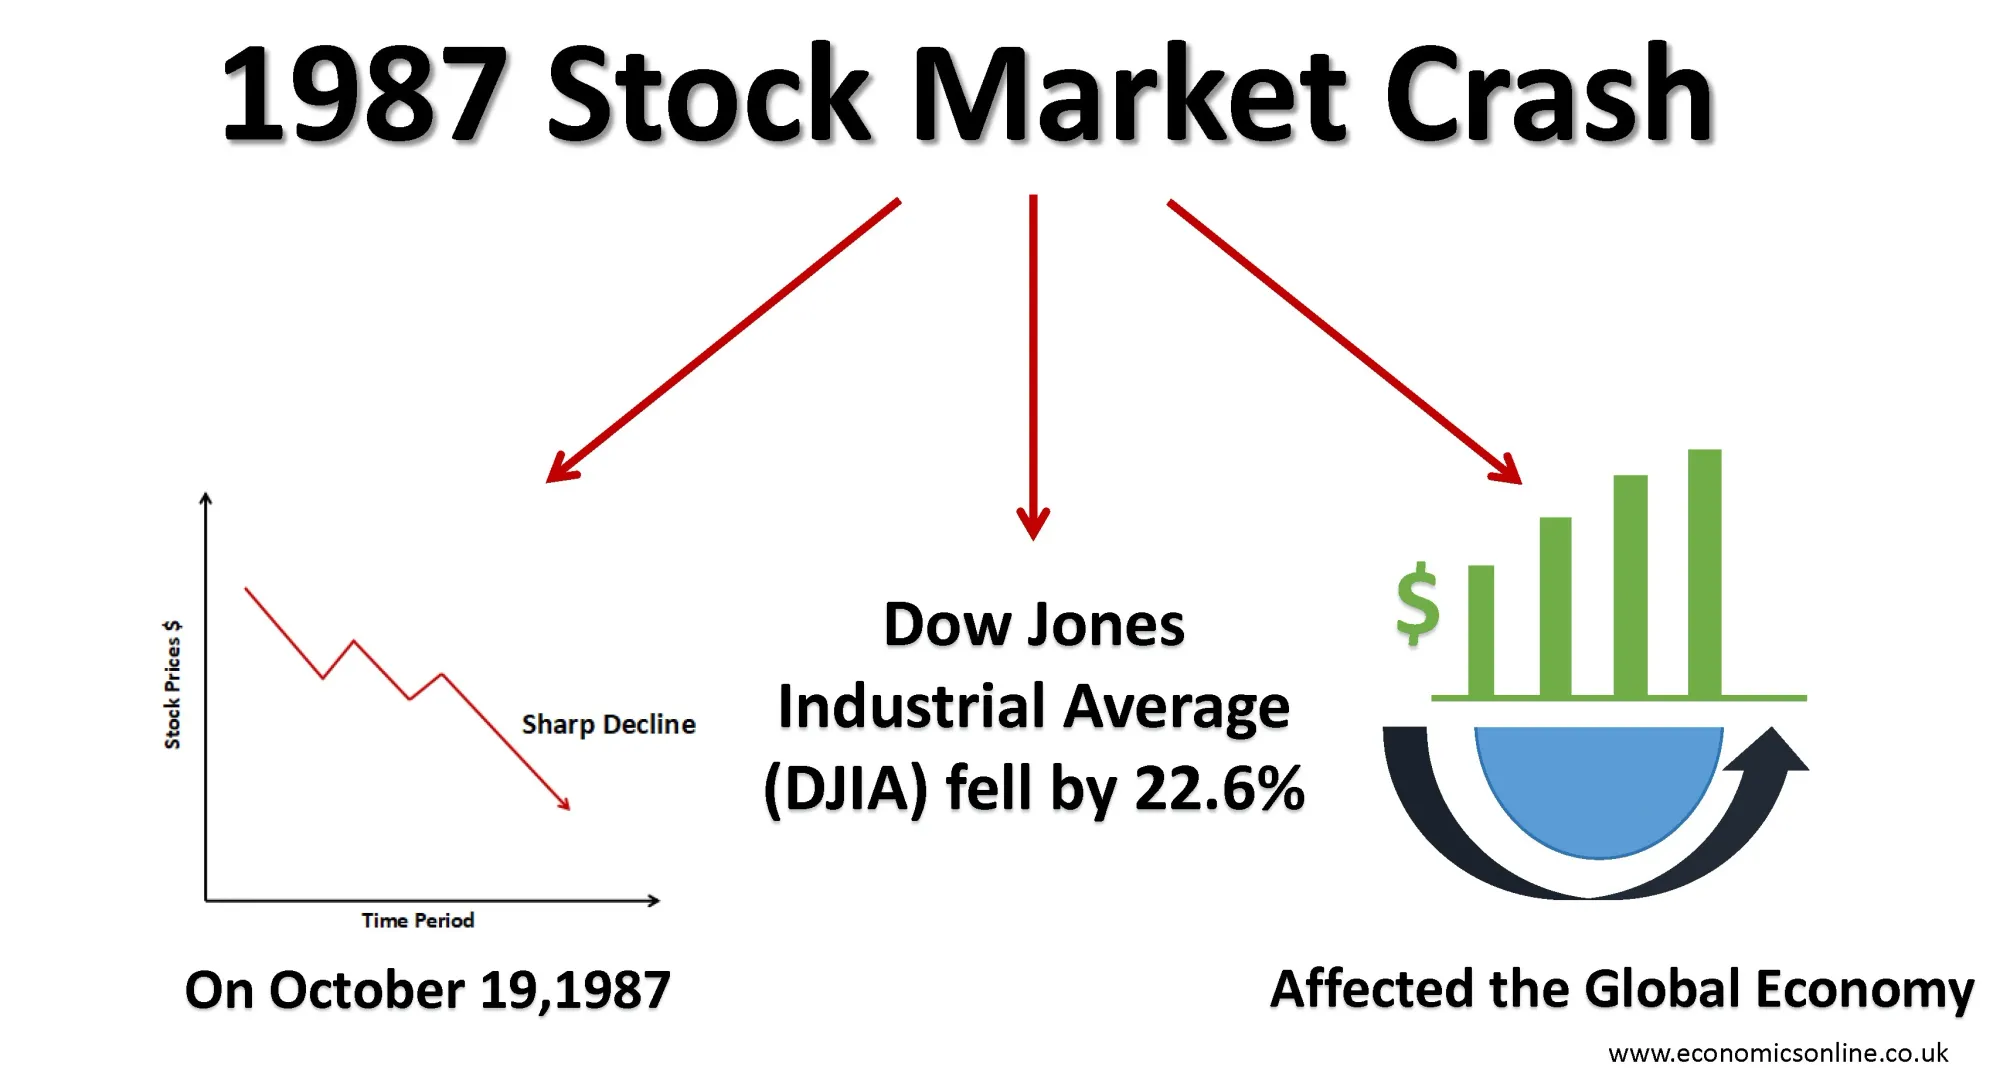 Stock Market Crash of 1987